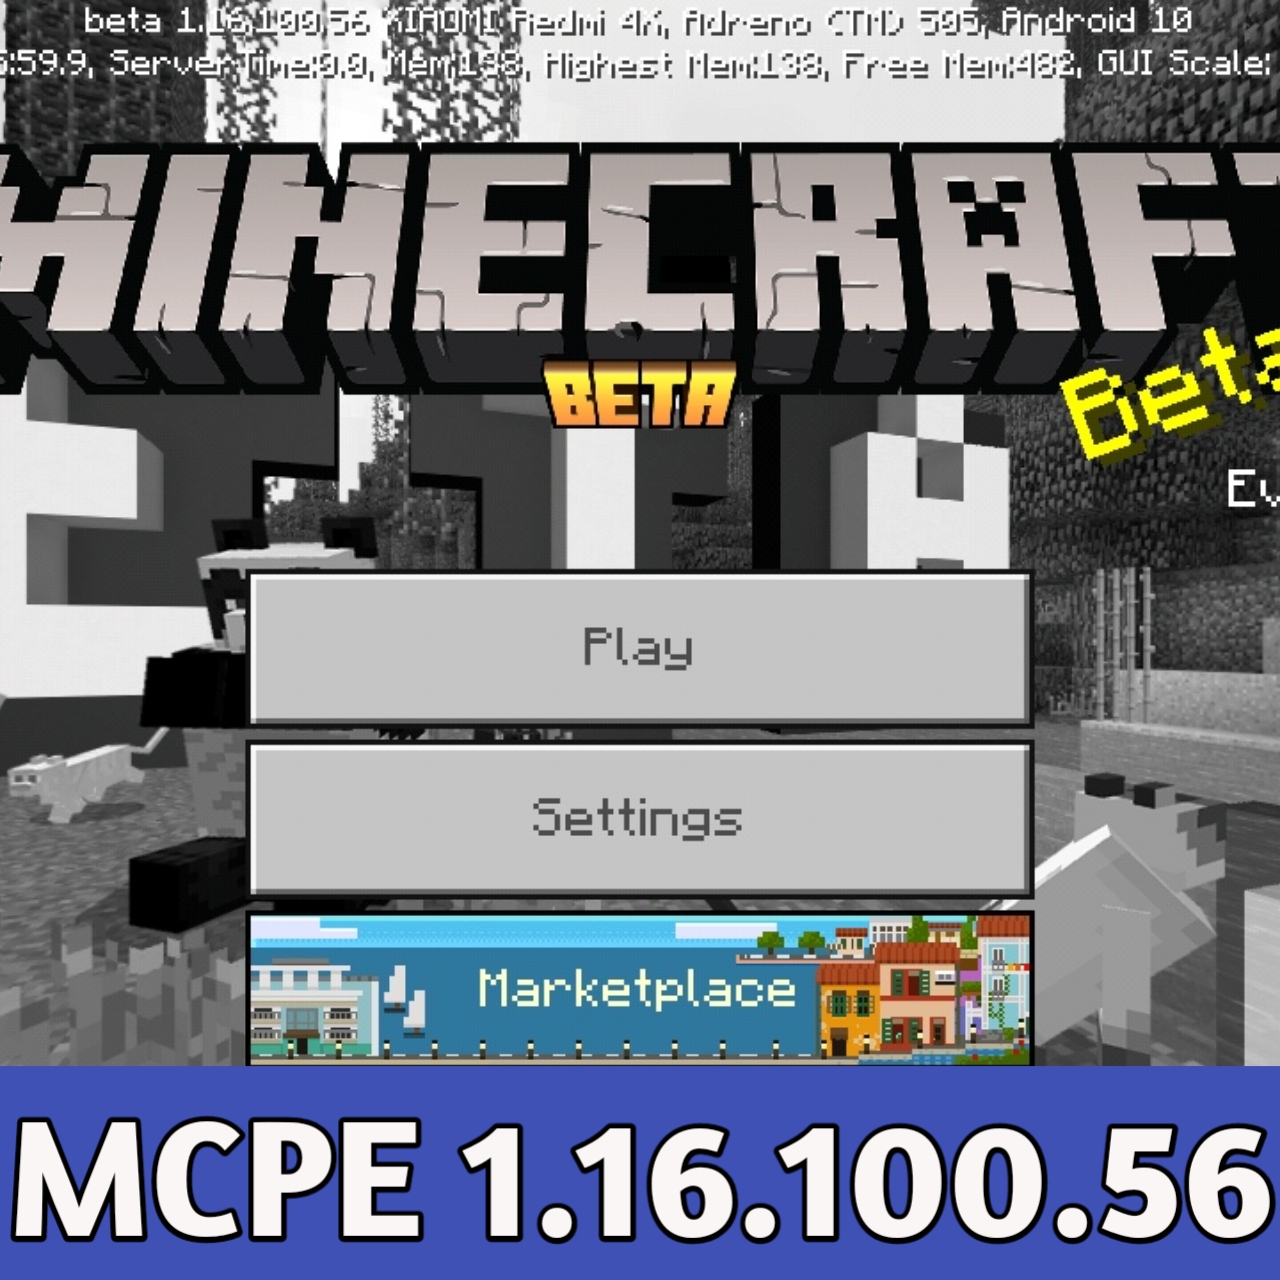 Download Minecraft PE 1.16.100 apk free: Nether Update